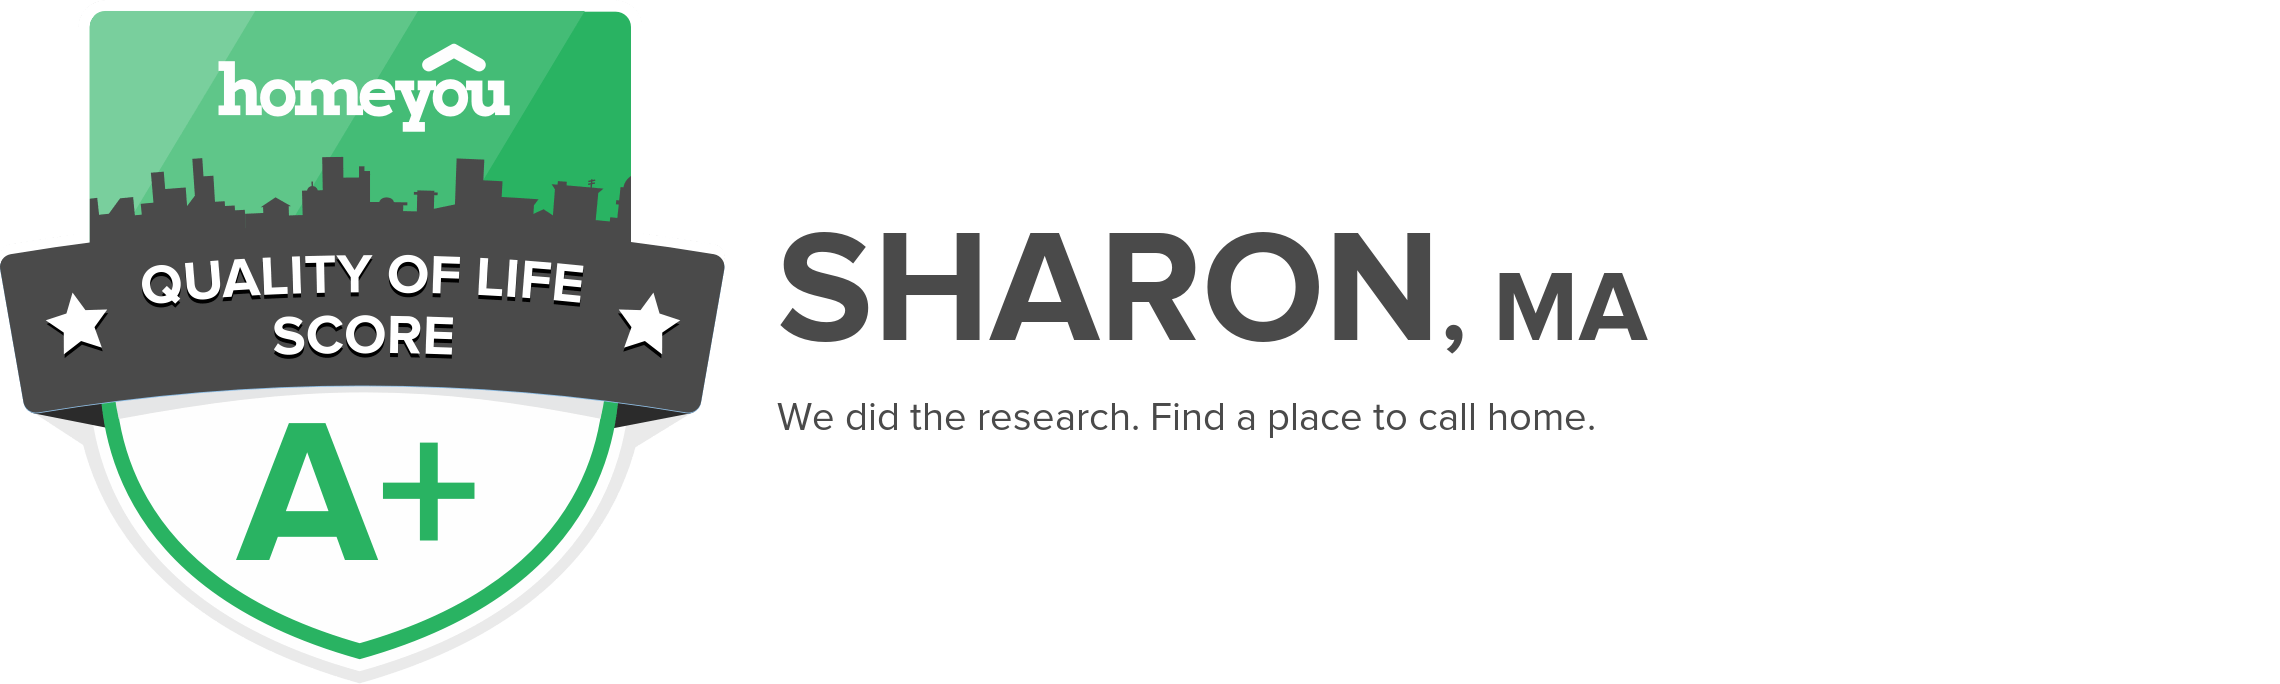 Sharon, MA